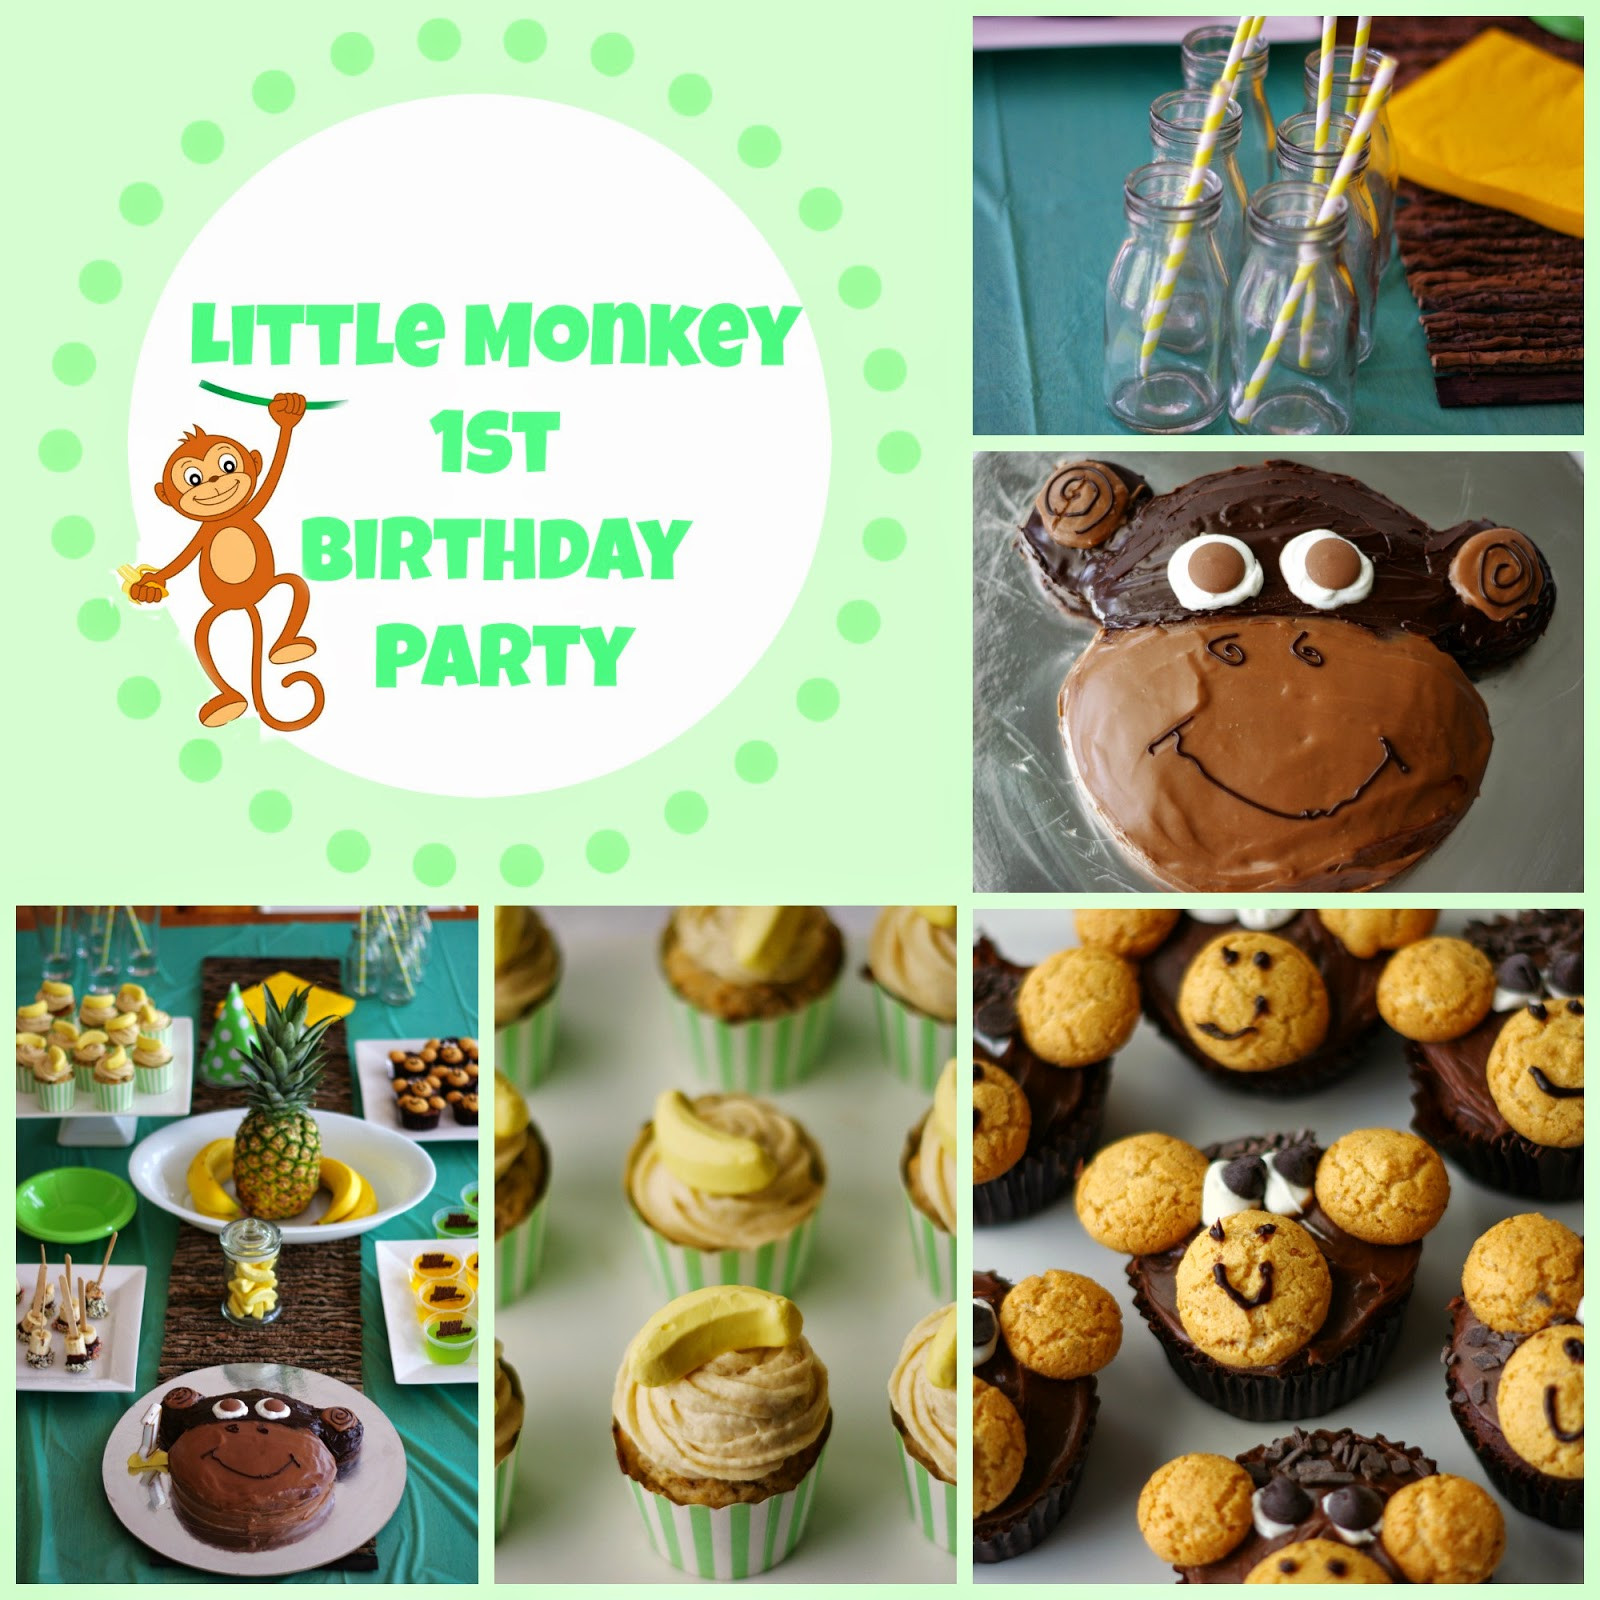 Monkey Birthday Party Ideas
 the nOATbook Little Monkey 1st Birthday Party